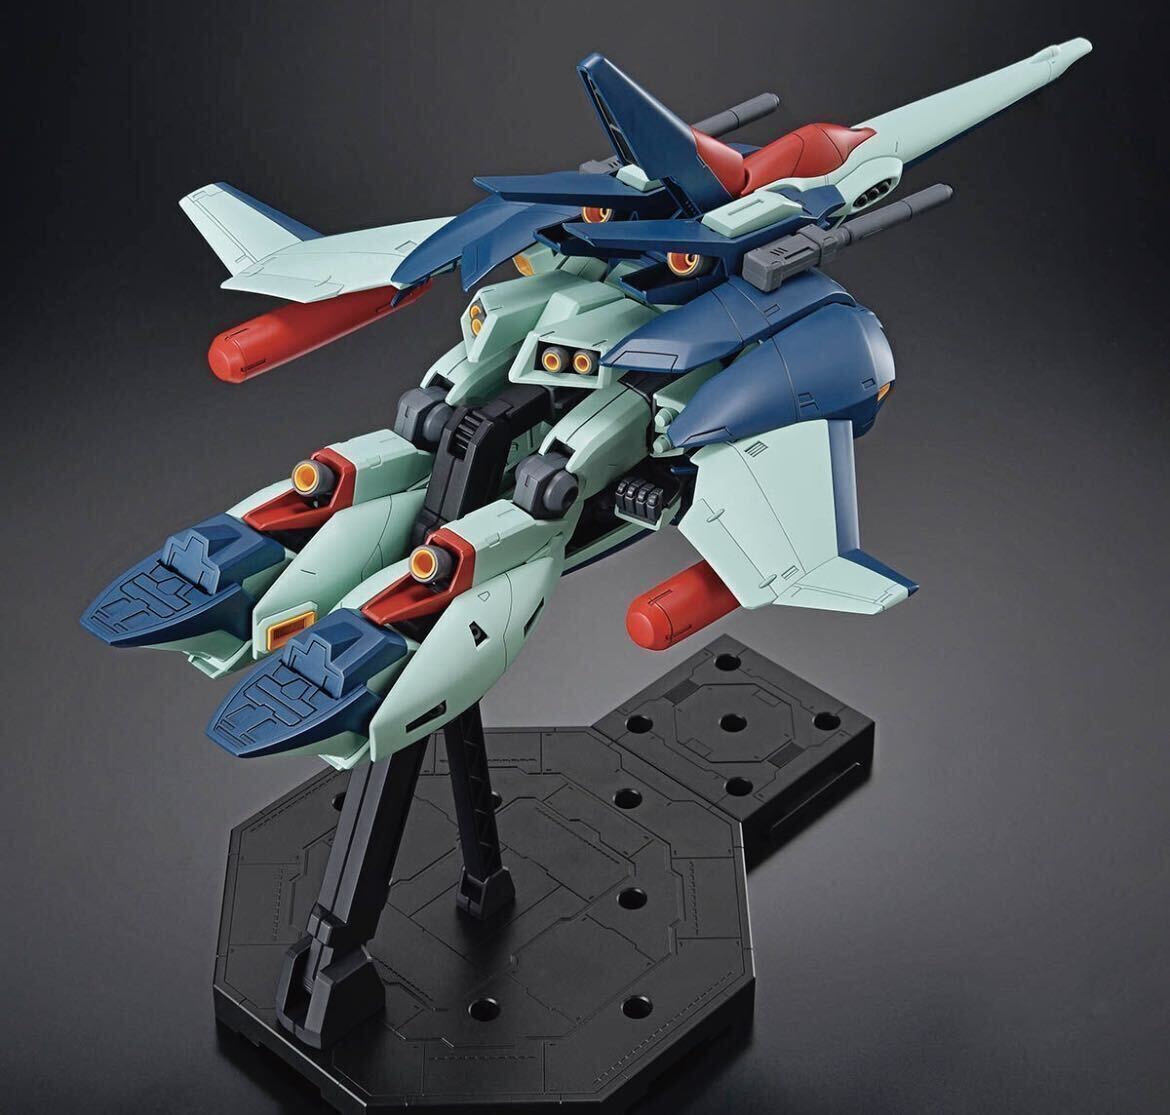  бесплатная доставка MG 1/100li*gaz. Char's Counterattack Ver. GUNDAM SIDE-F Gundam Char's Counterattack Gundam основа тормозные колодки комплектация ligaz.Re-GZ